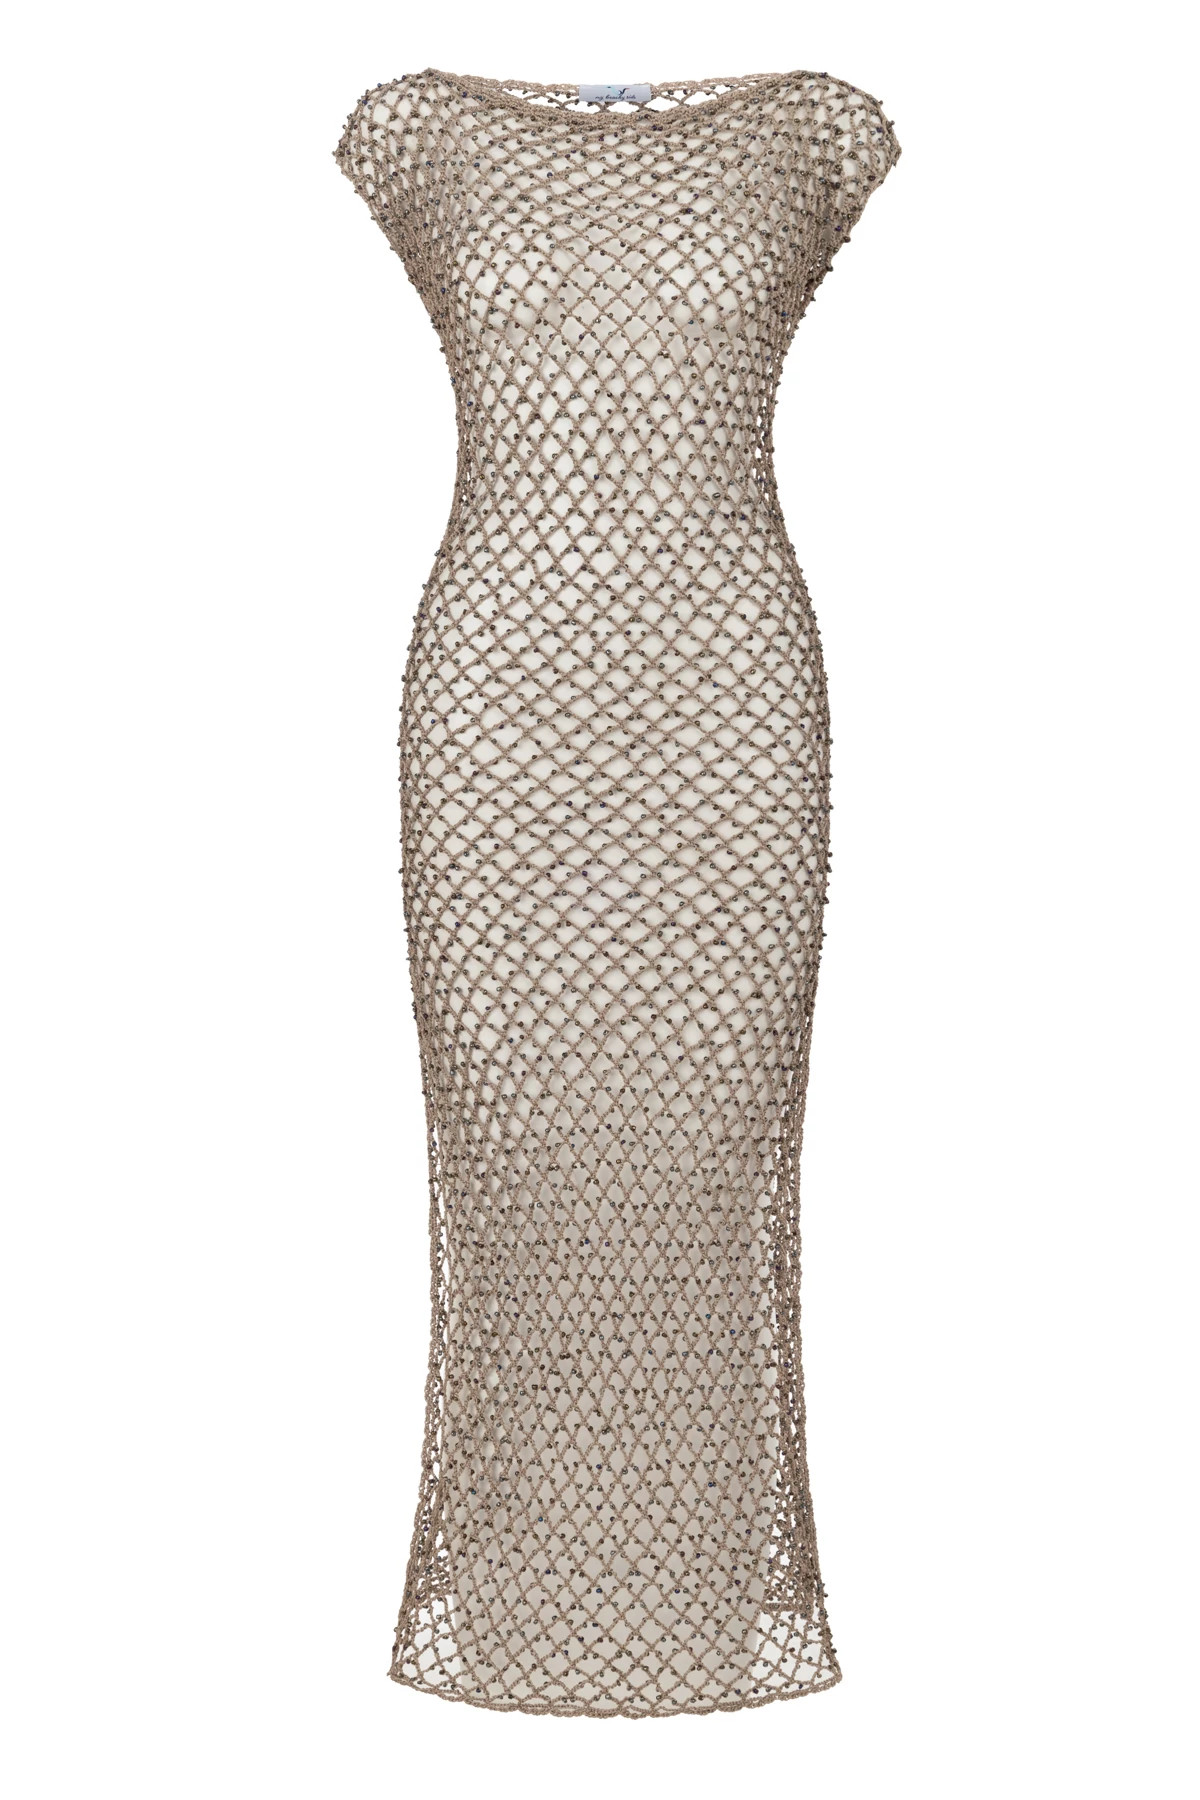 BRONZE Hand Crochet Net Beaded Maxi Dress image number 3